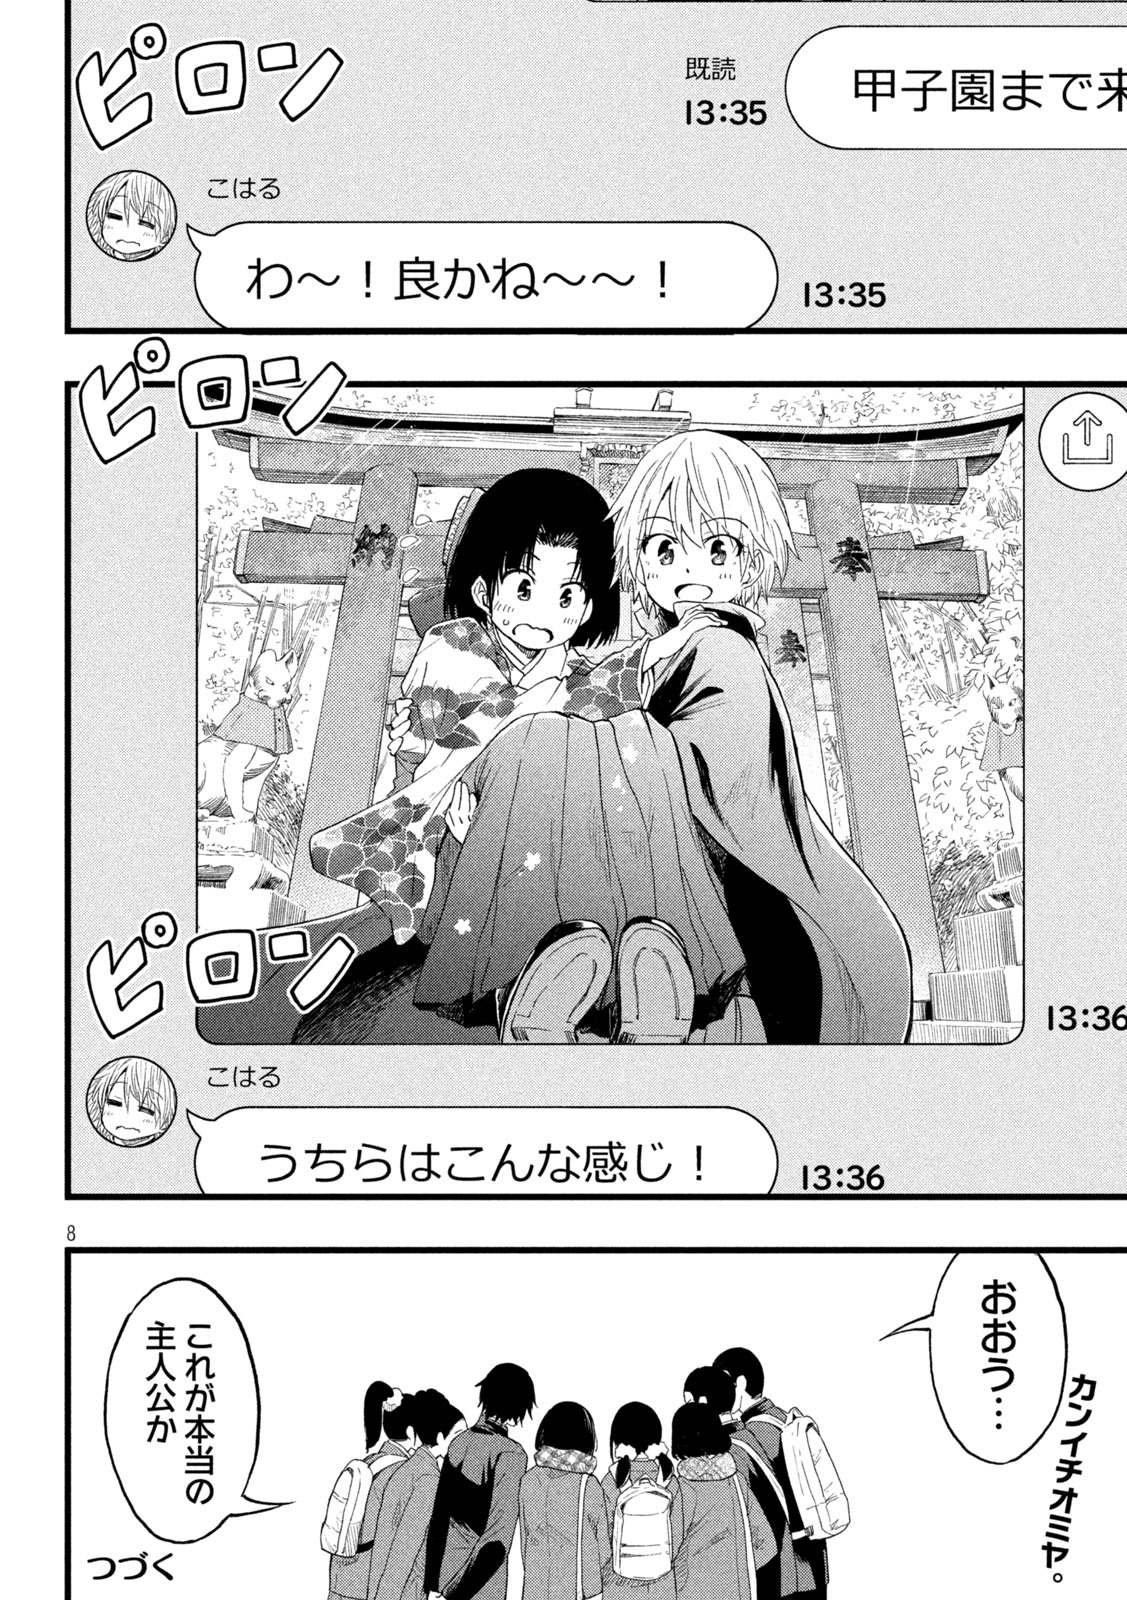 Koharu haru! - Chapter 69 - Page 4